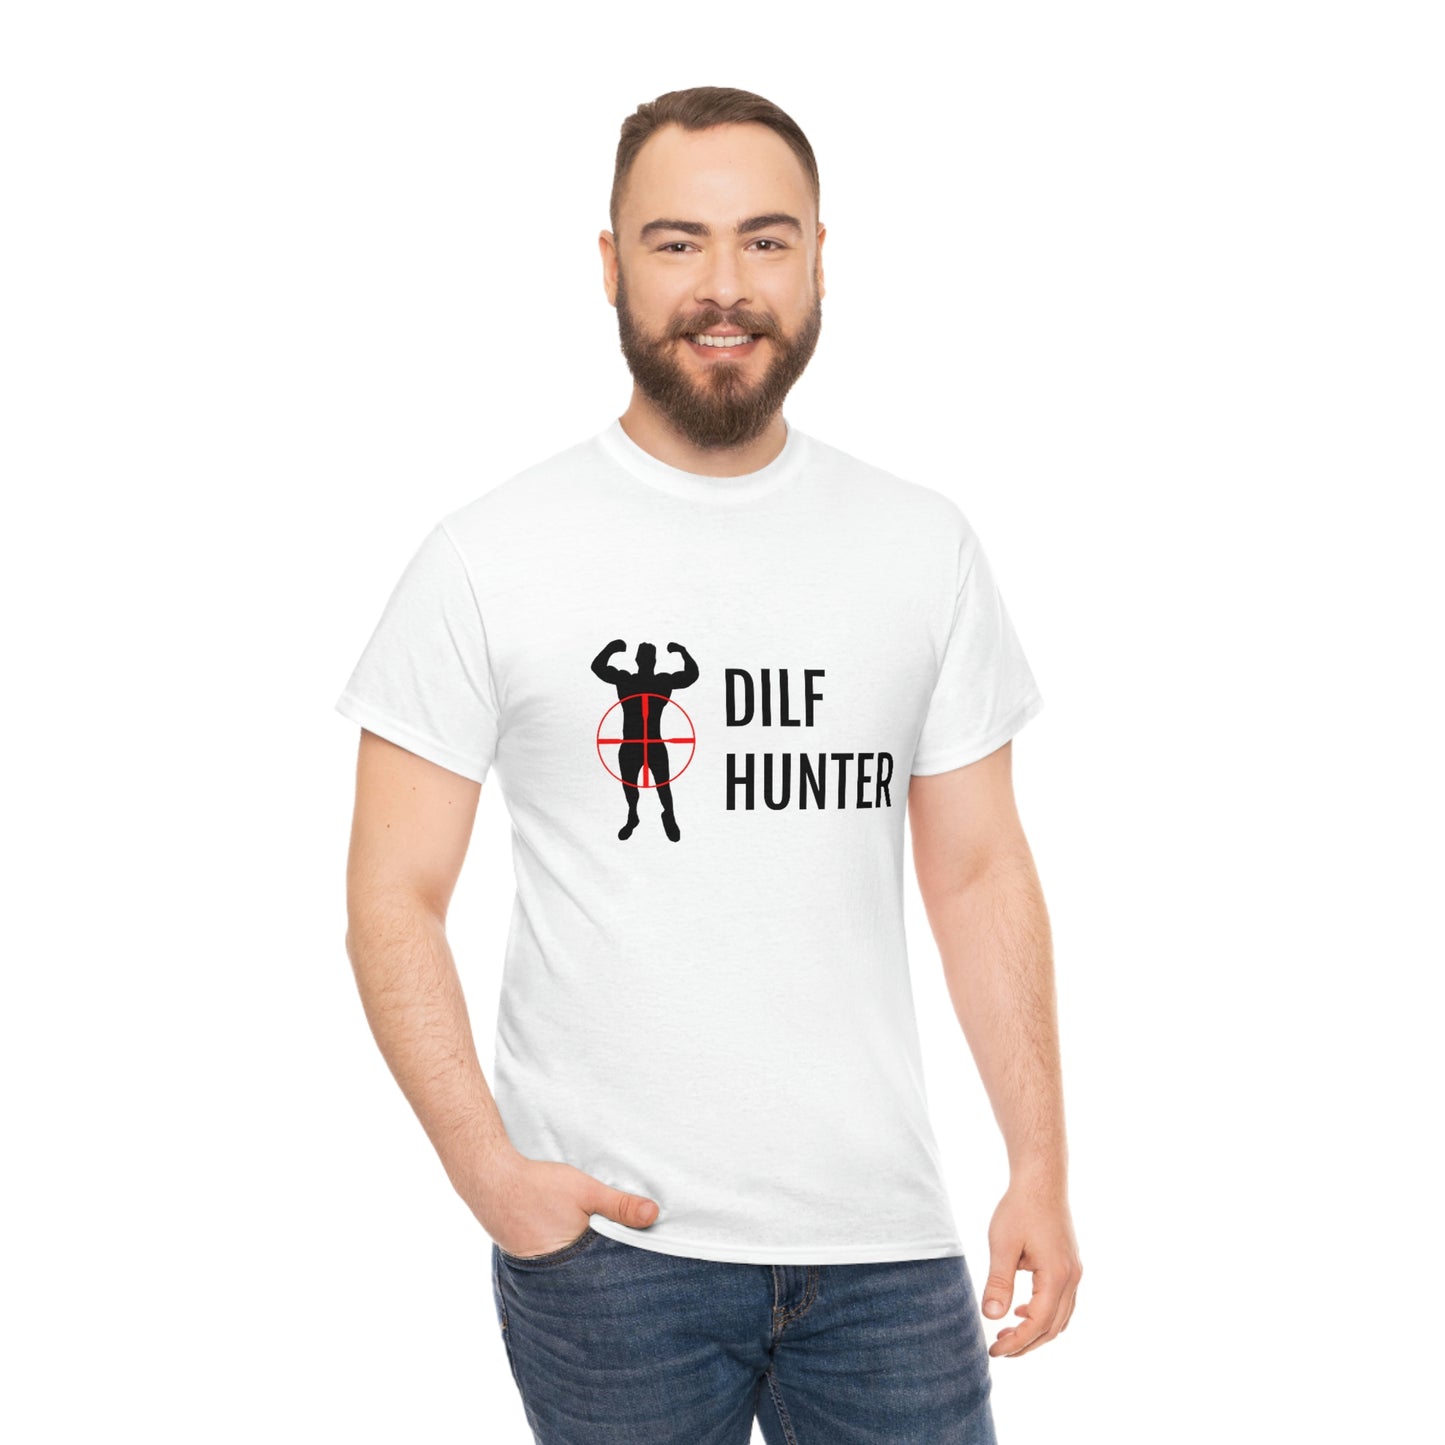 DILF HUNTER T-SHIRT